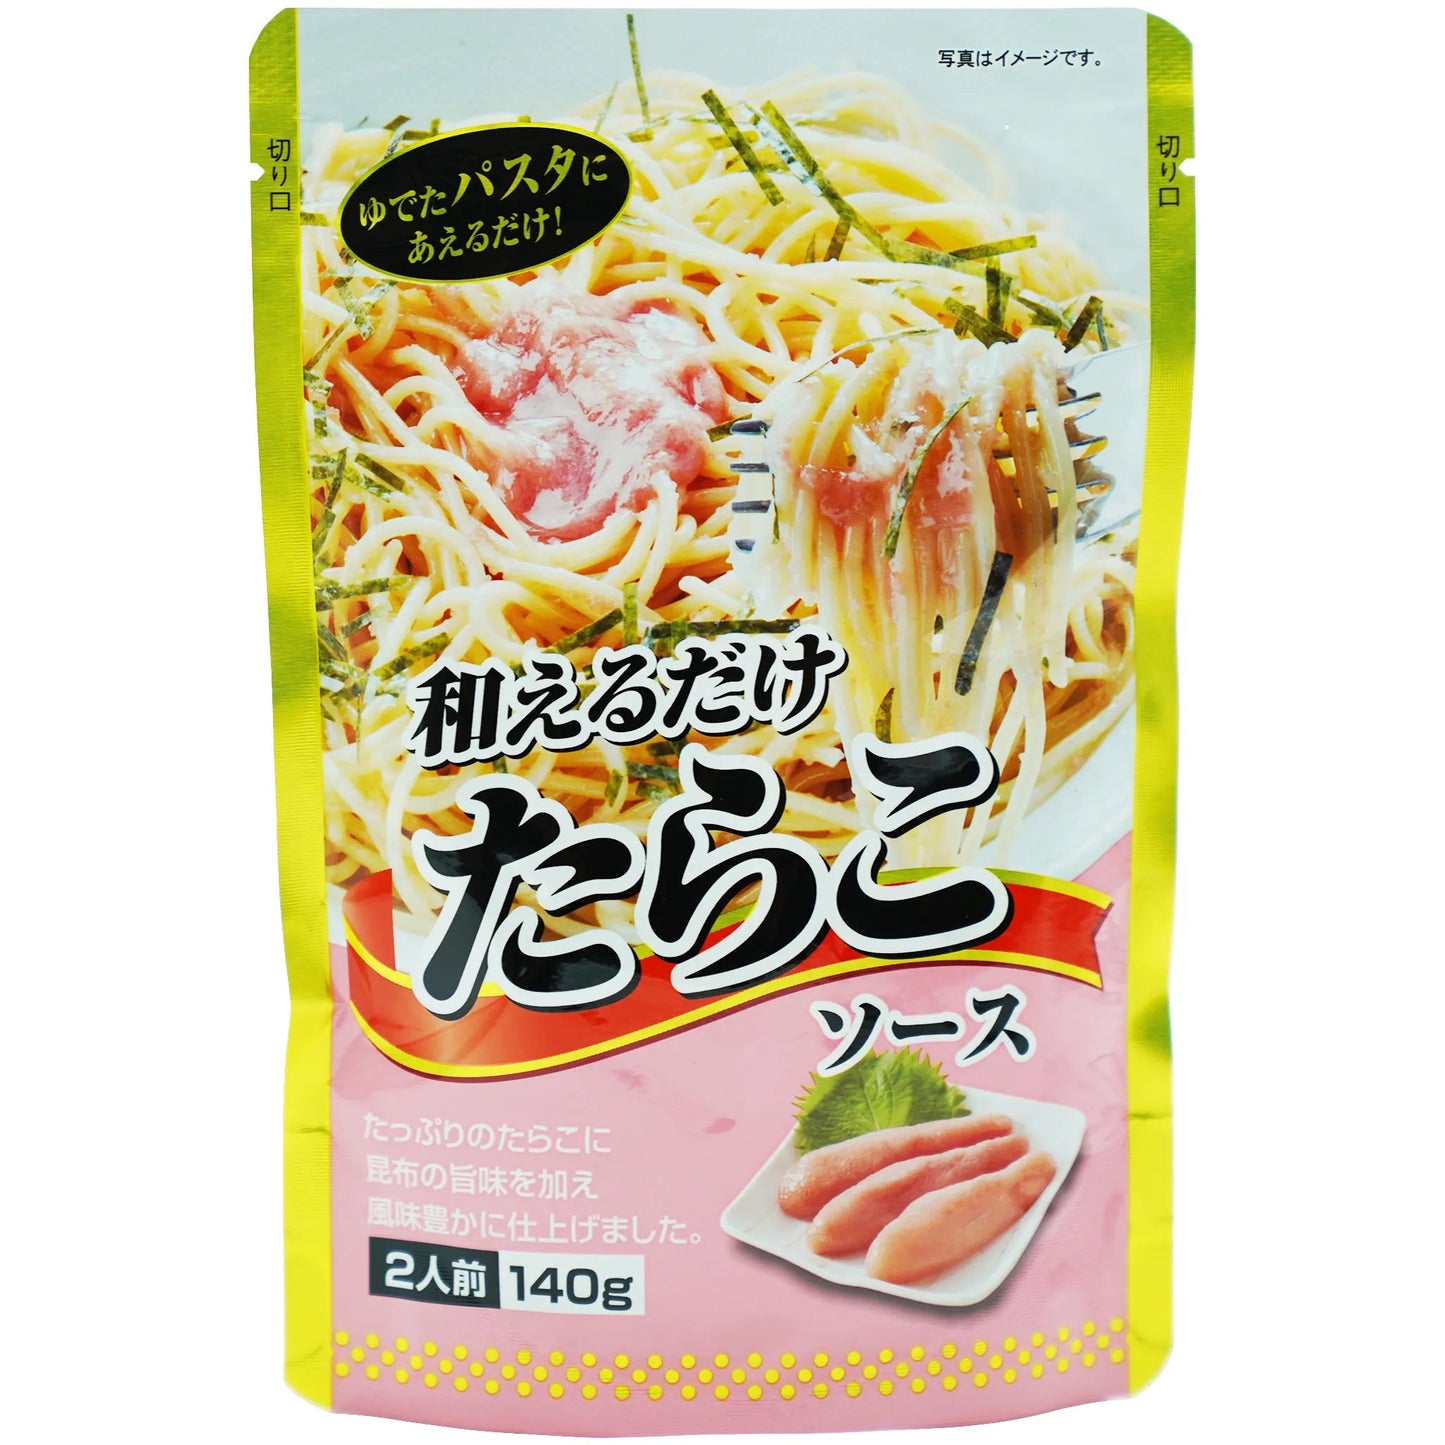 Kosho Tarako Pasta Sauce 4.93 oz